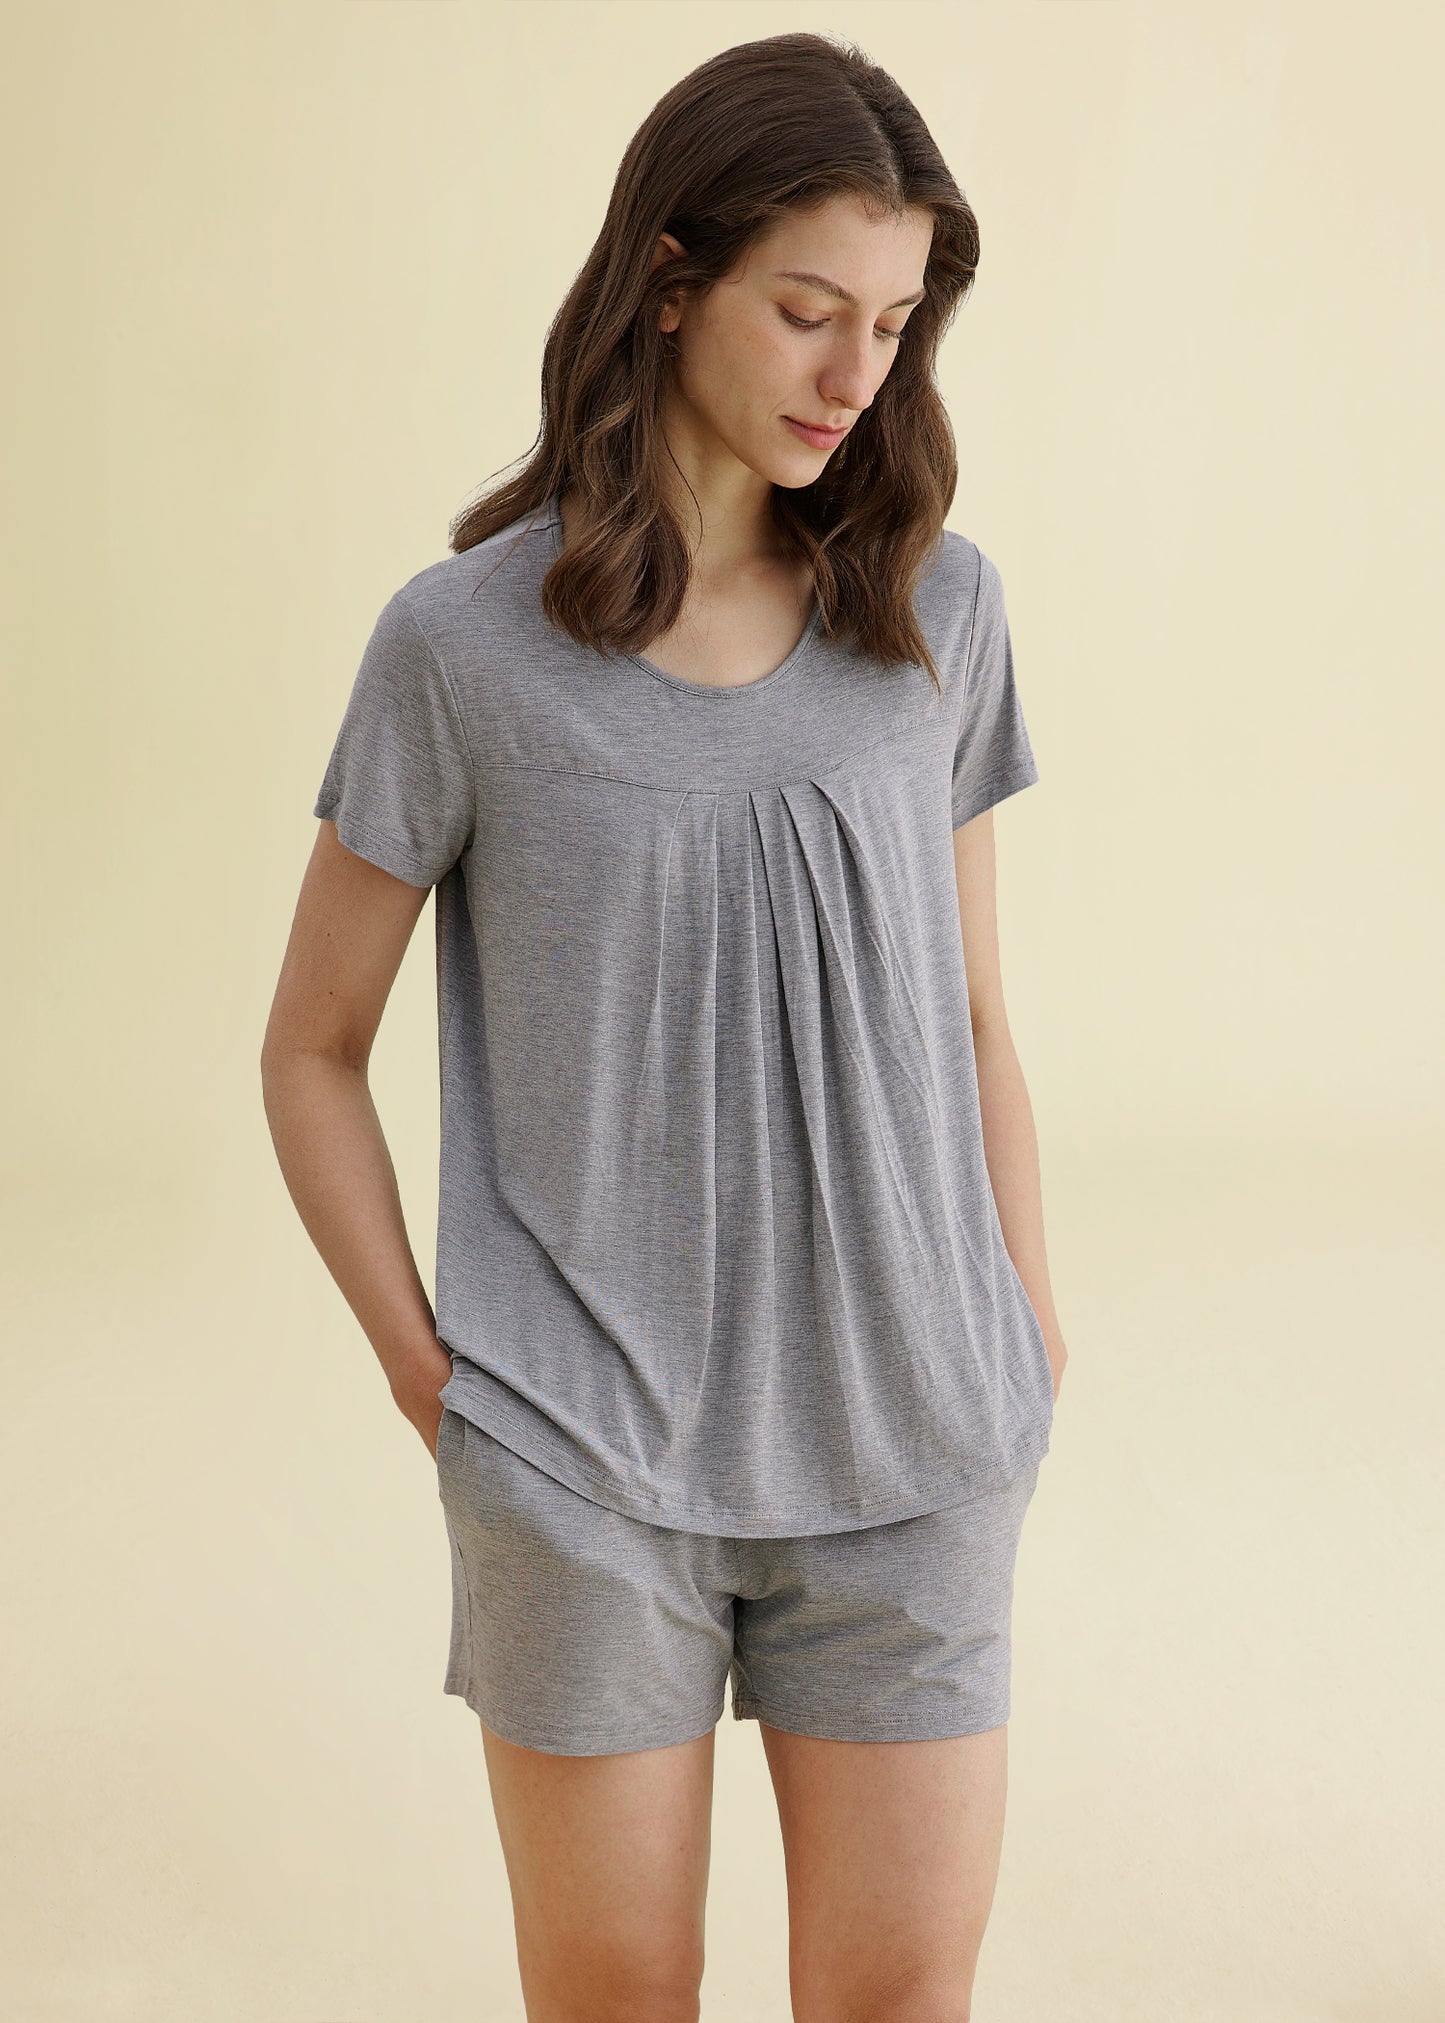 Women’s Pajamas Pleated Loungewear Top Shorts Bamboo Pjs Set